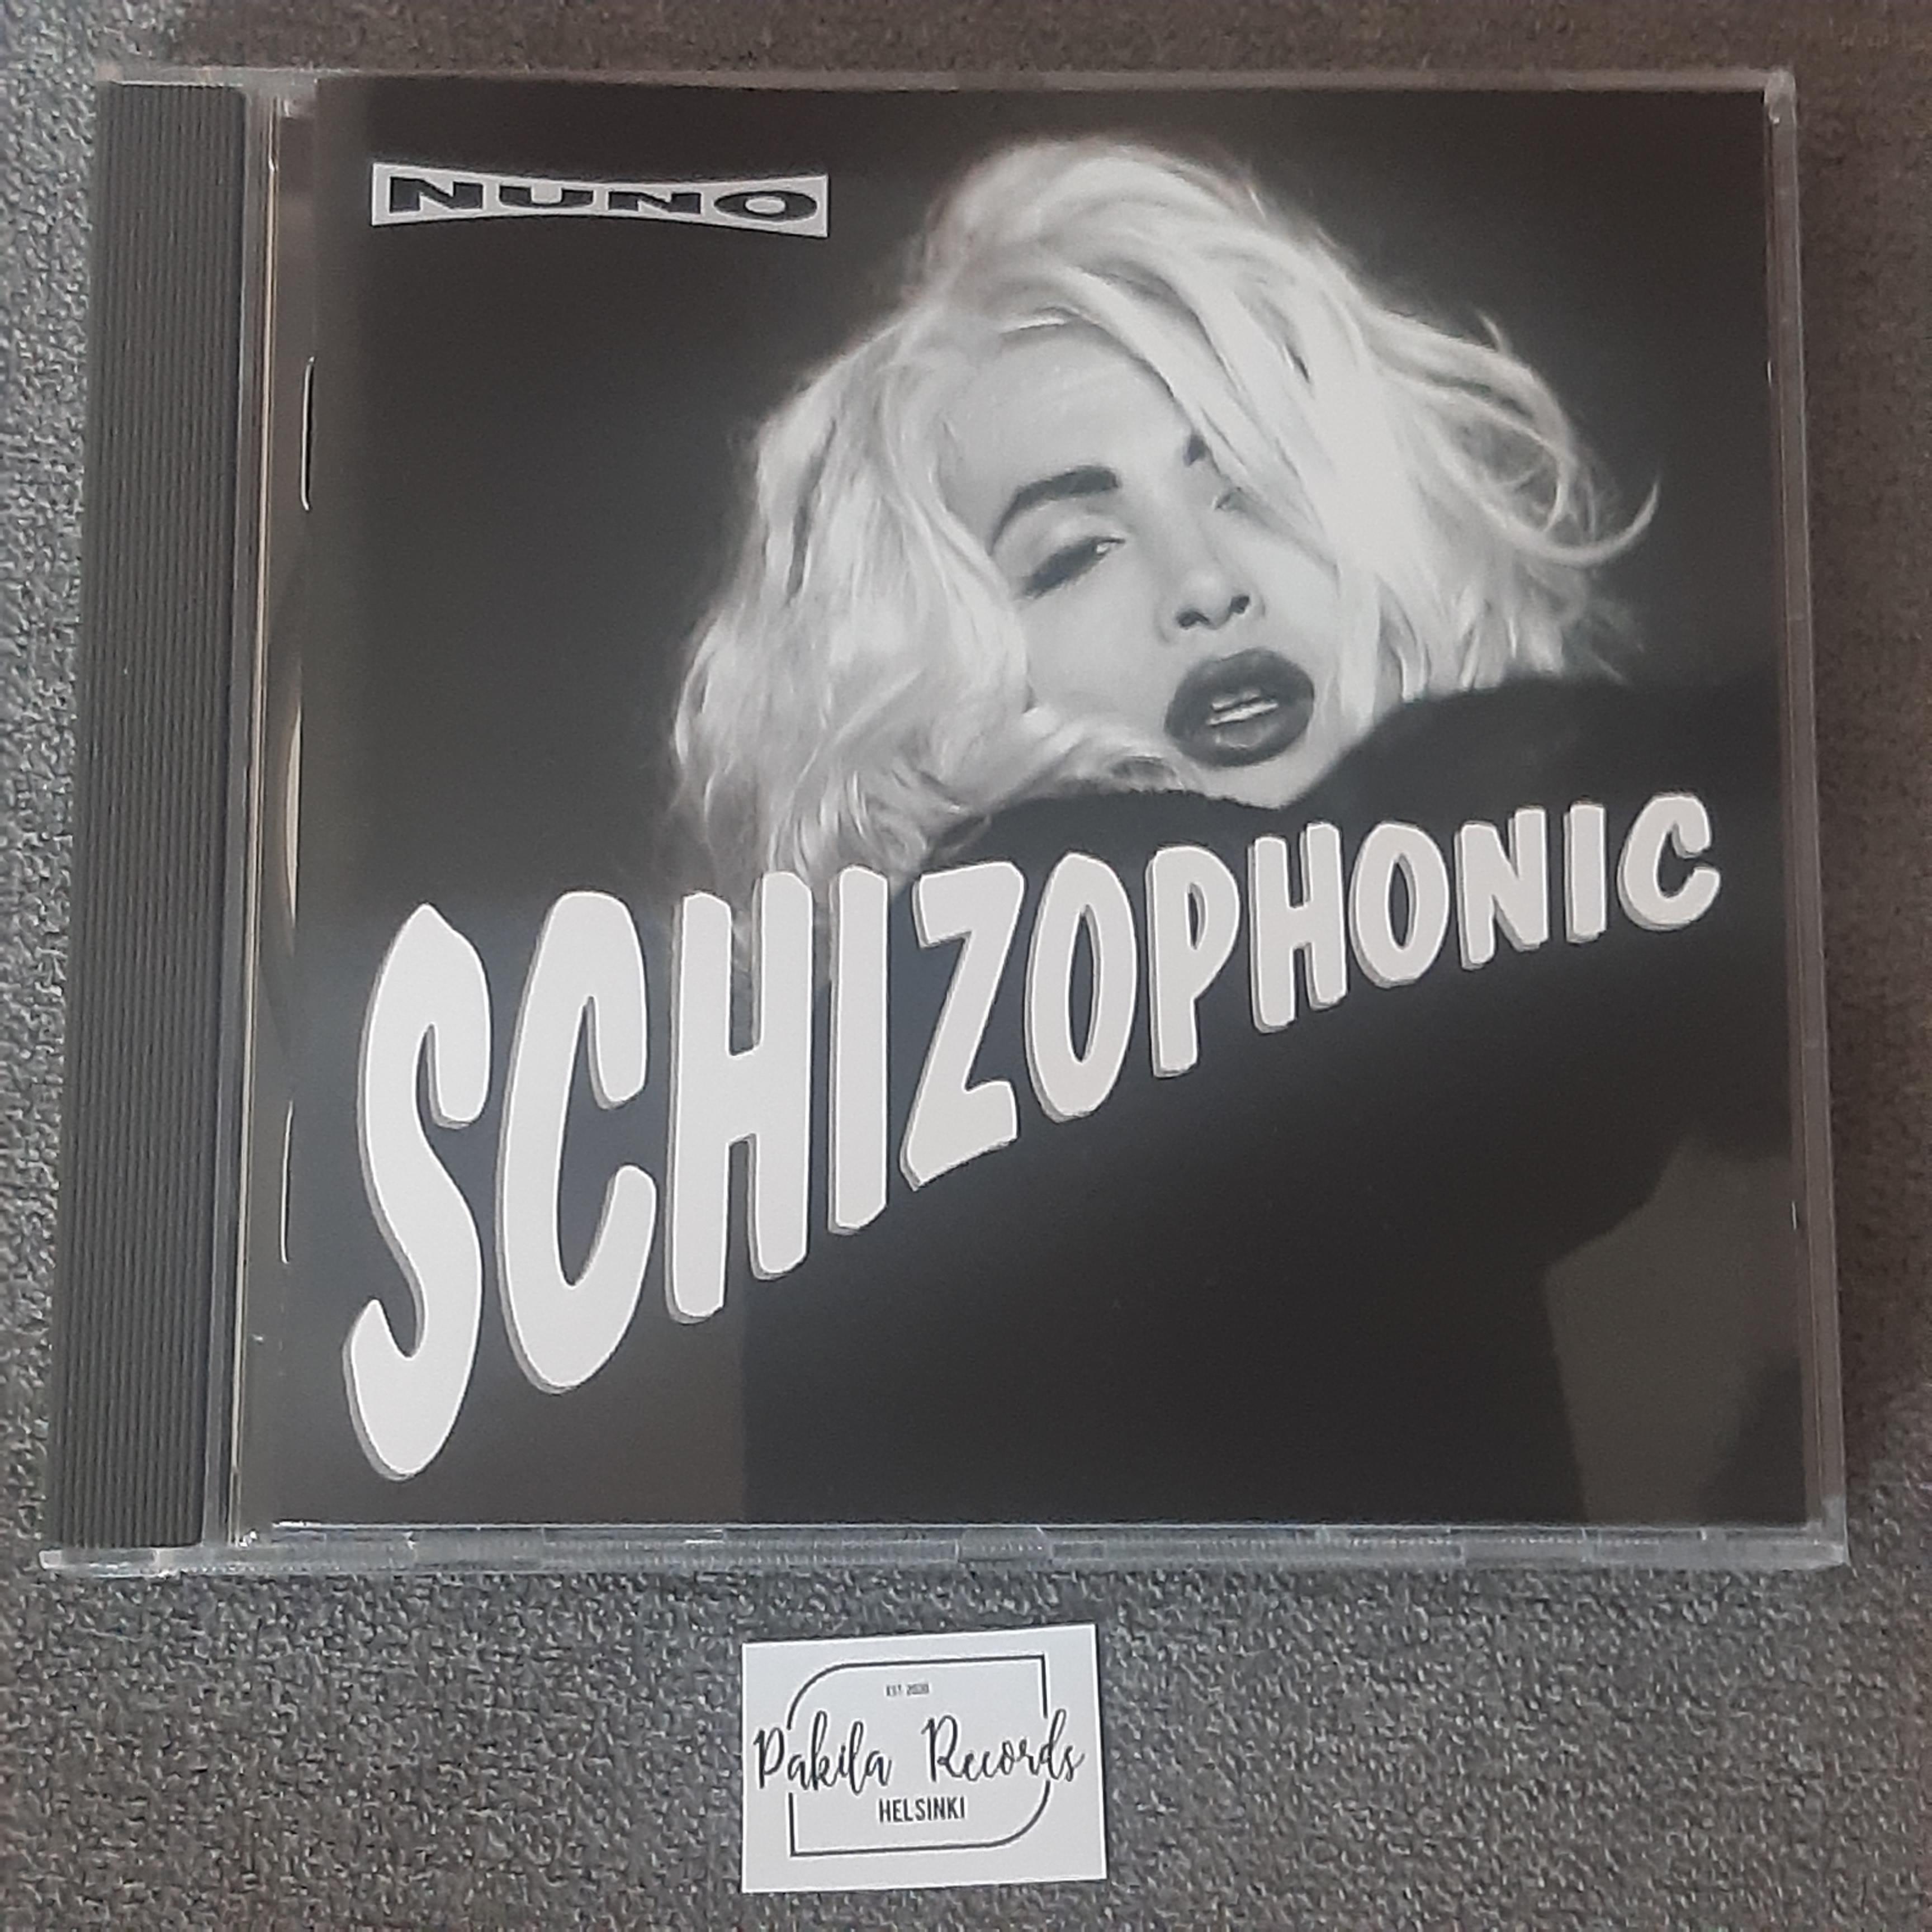 Nuno - Schizophonic - CD (käytetty)